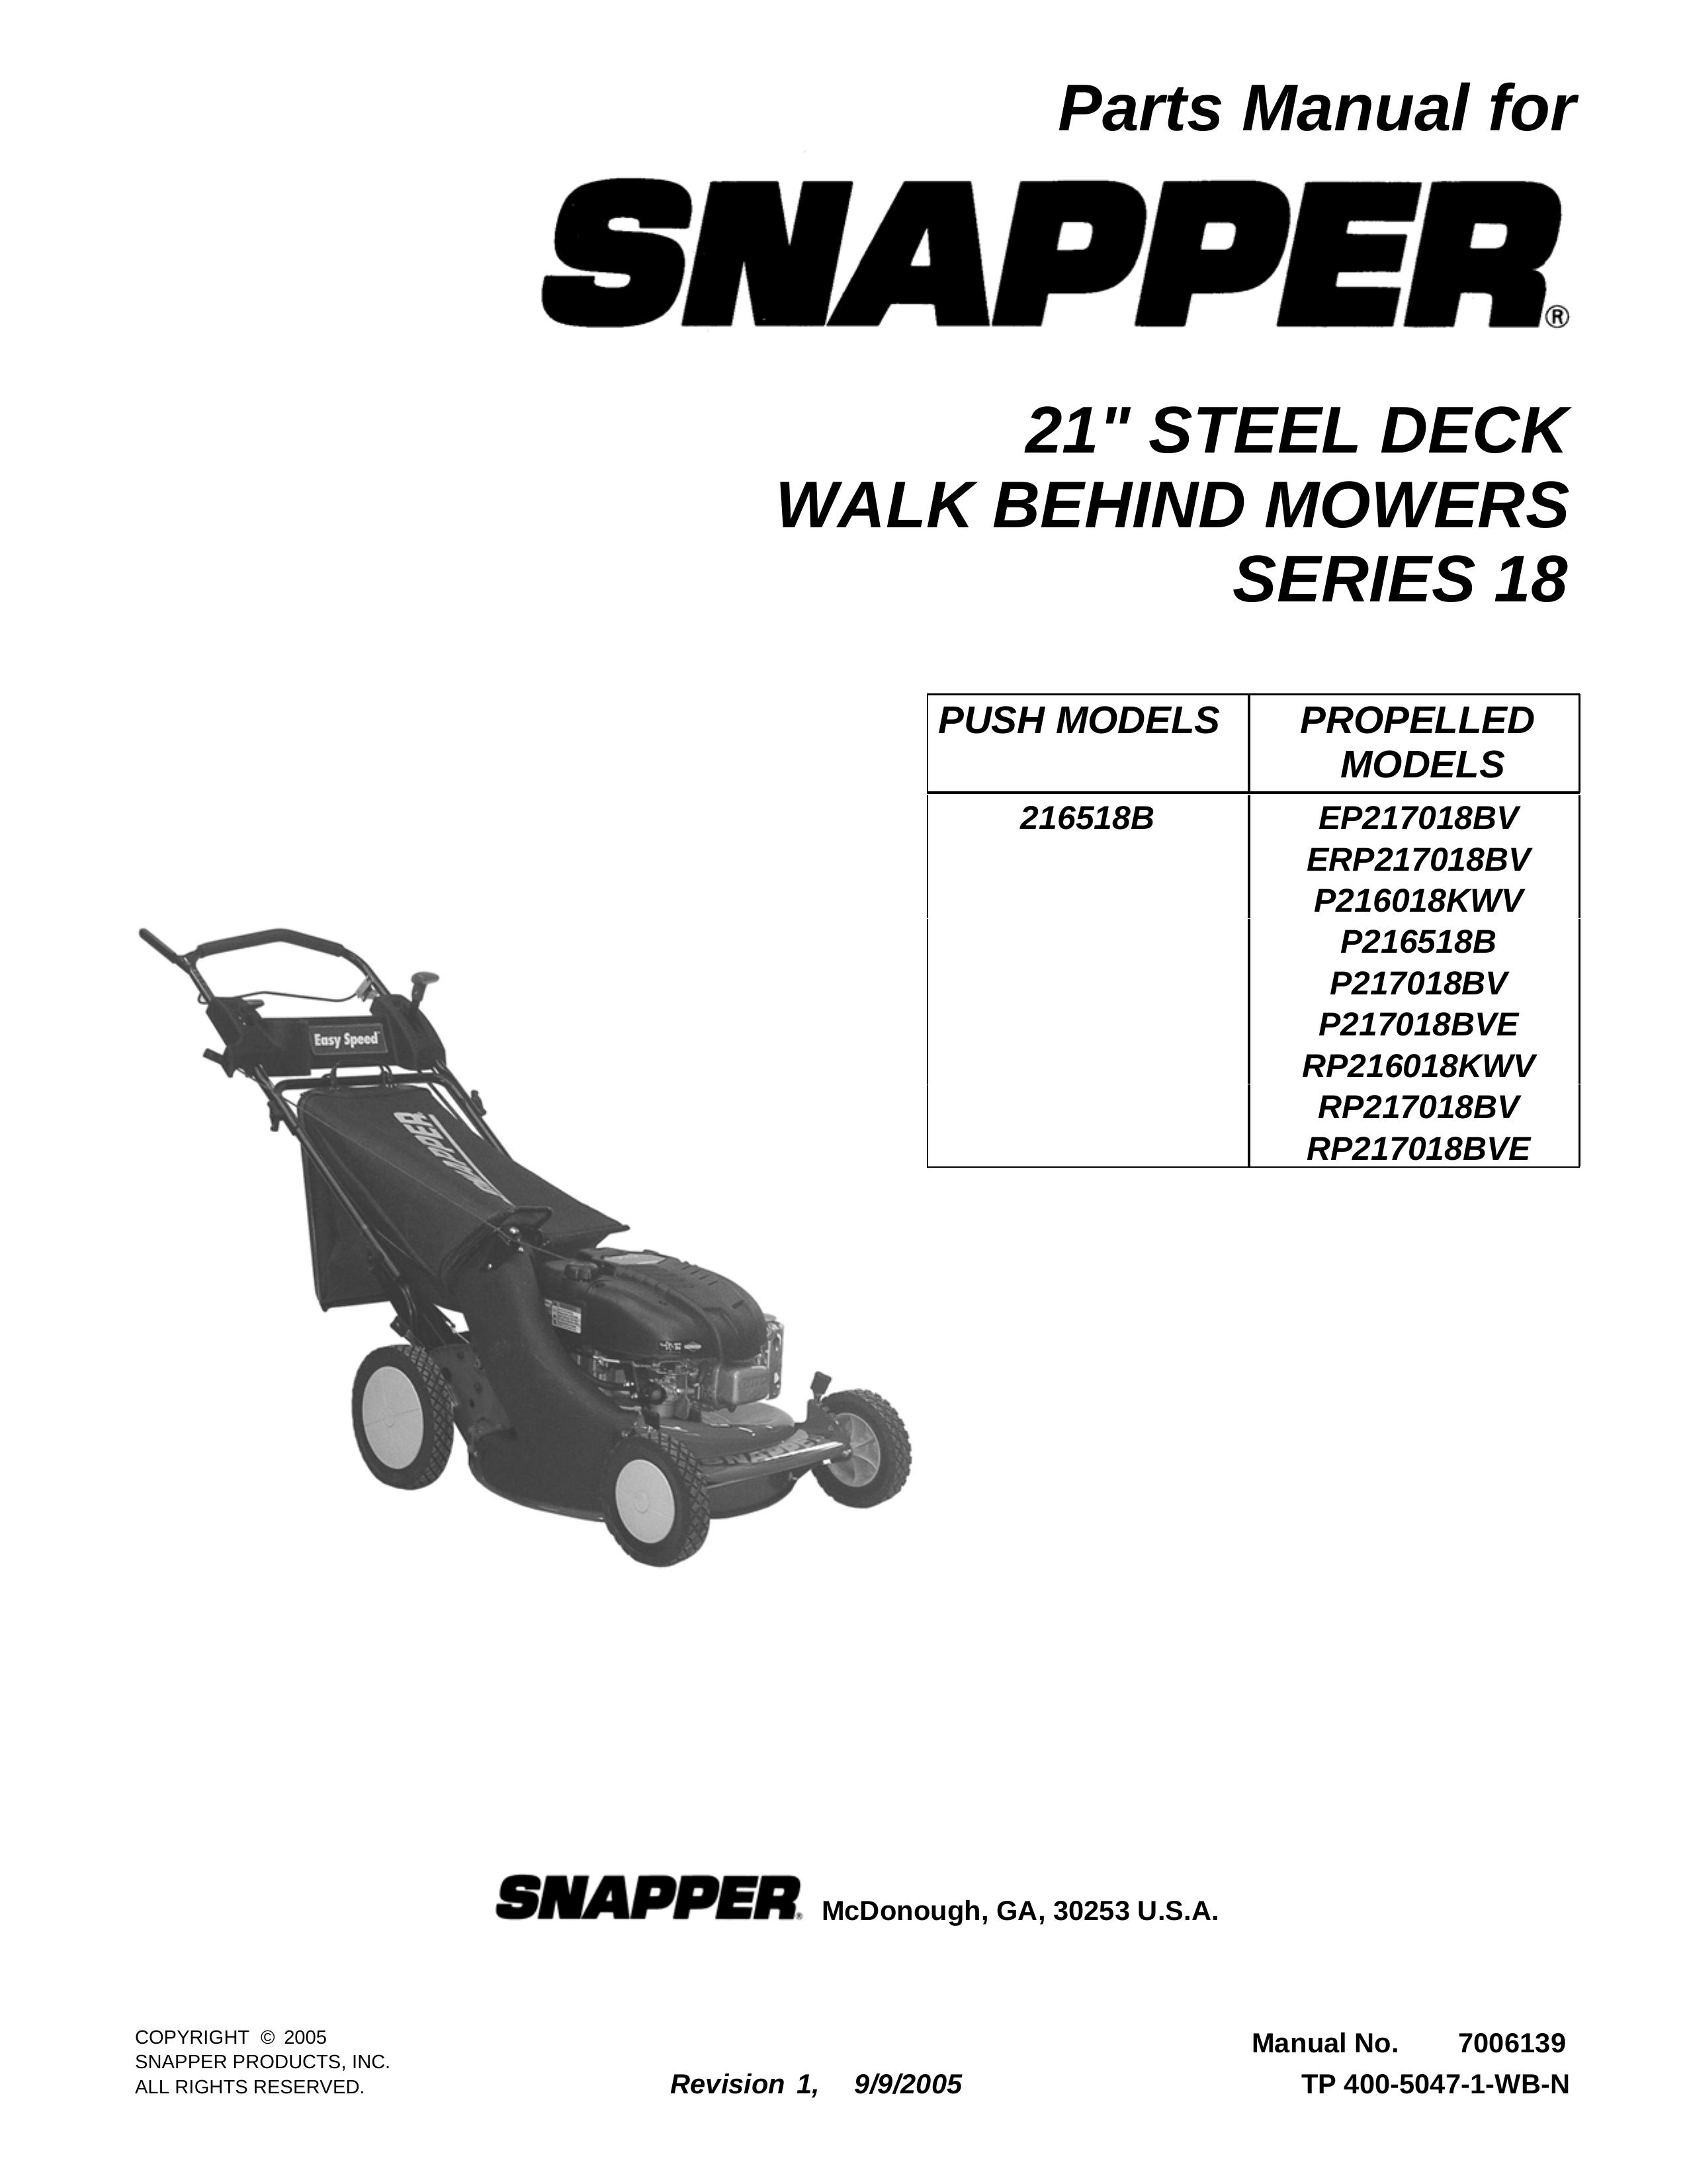 Snapper P217018BVE Camcorder User Manual